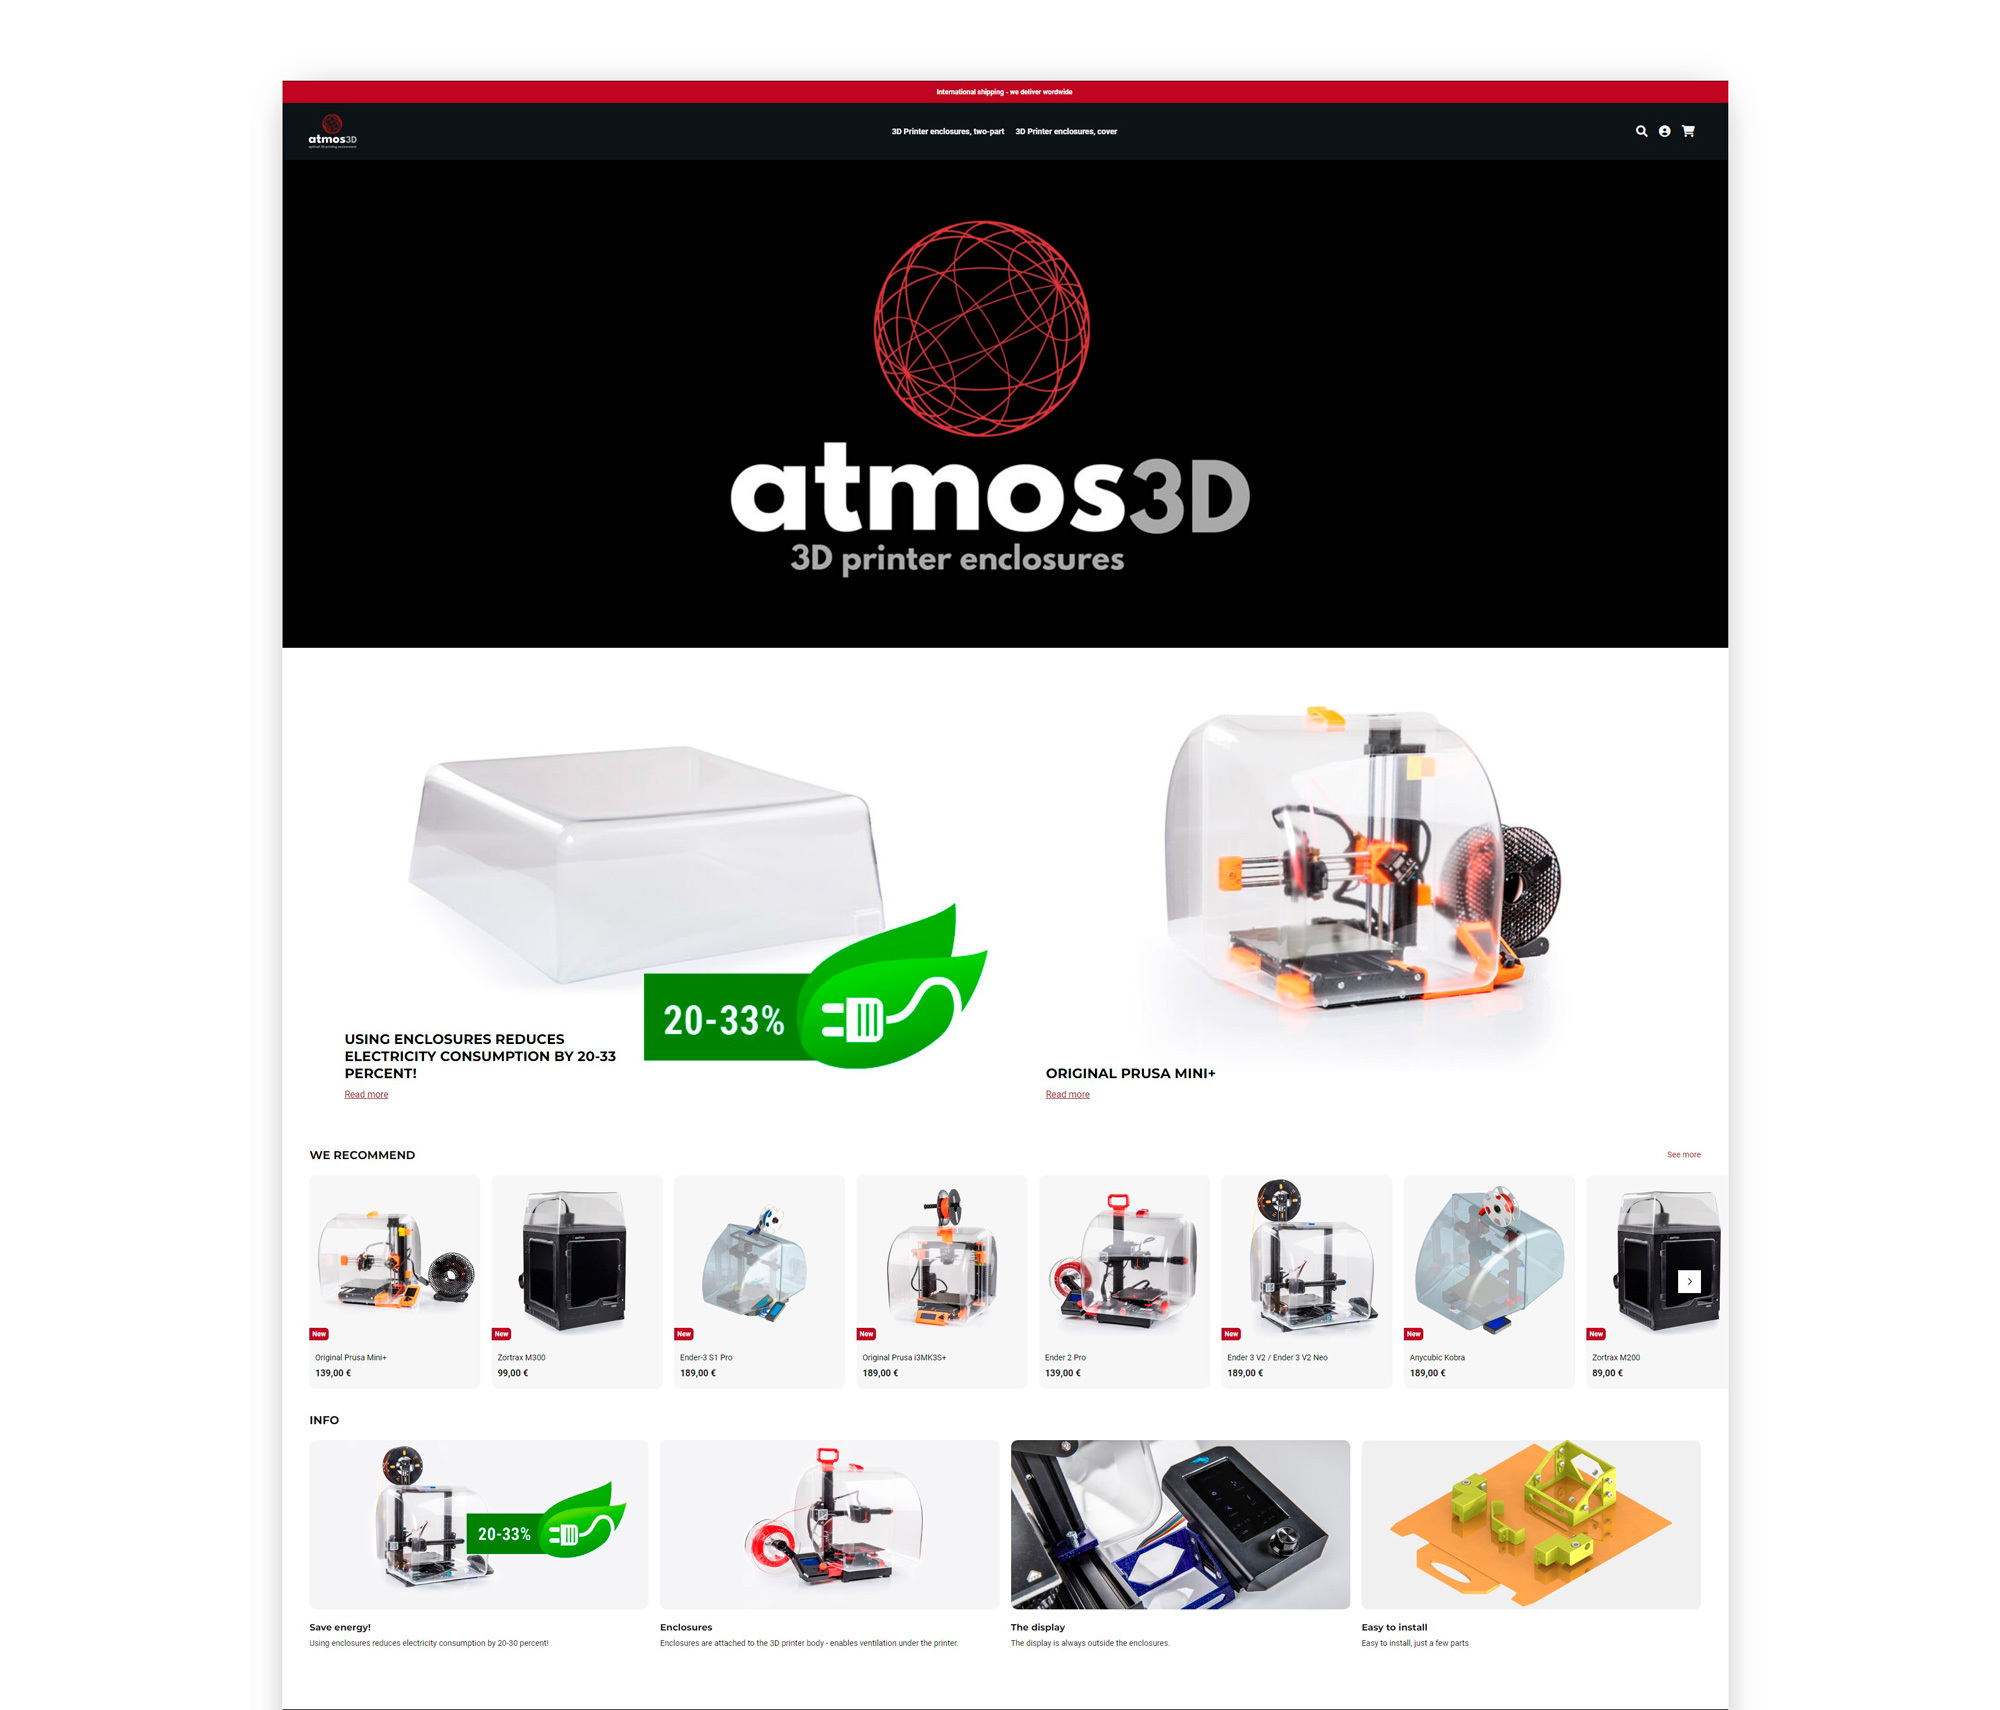 Verkkokauppa referenssi Intoo Digimainostoimisto - Atmos3D printer enclosures